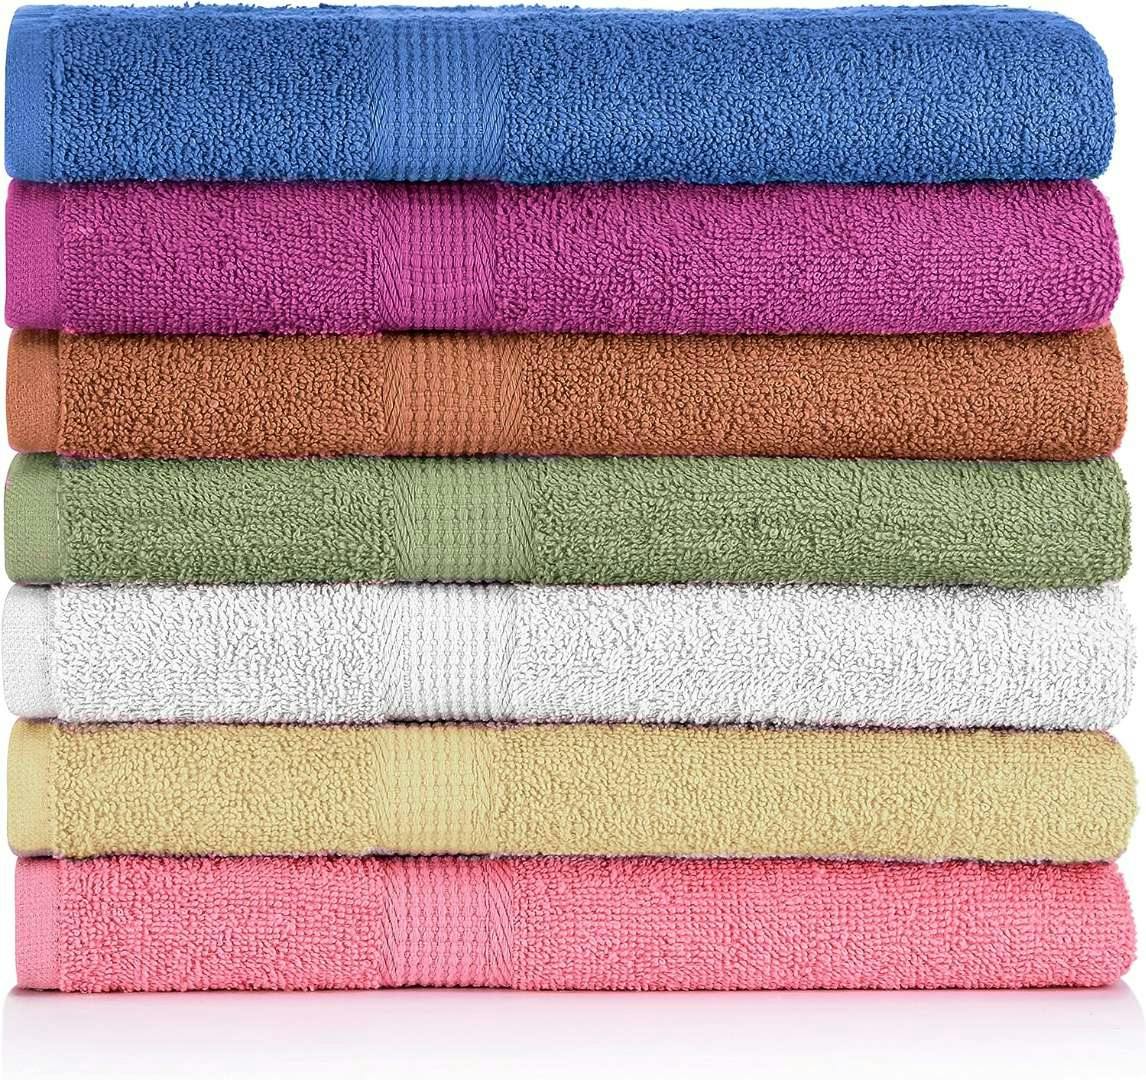 Bulk Bath Towels - Assorted